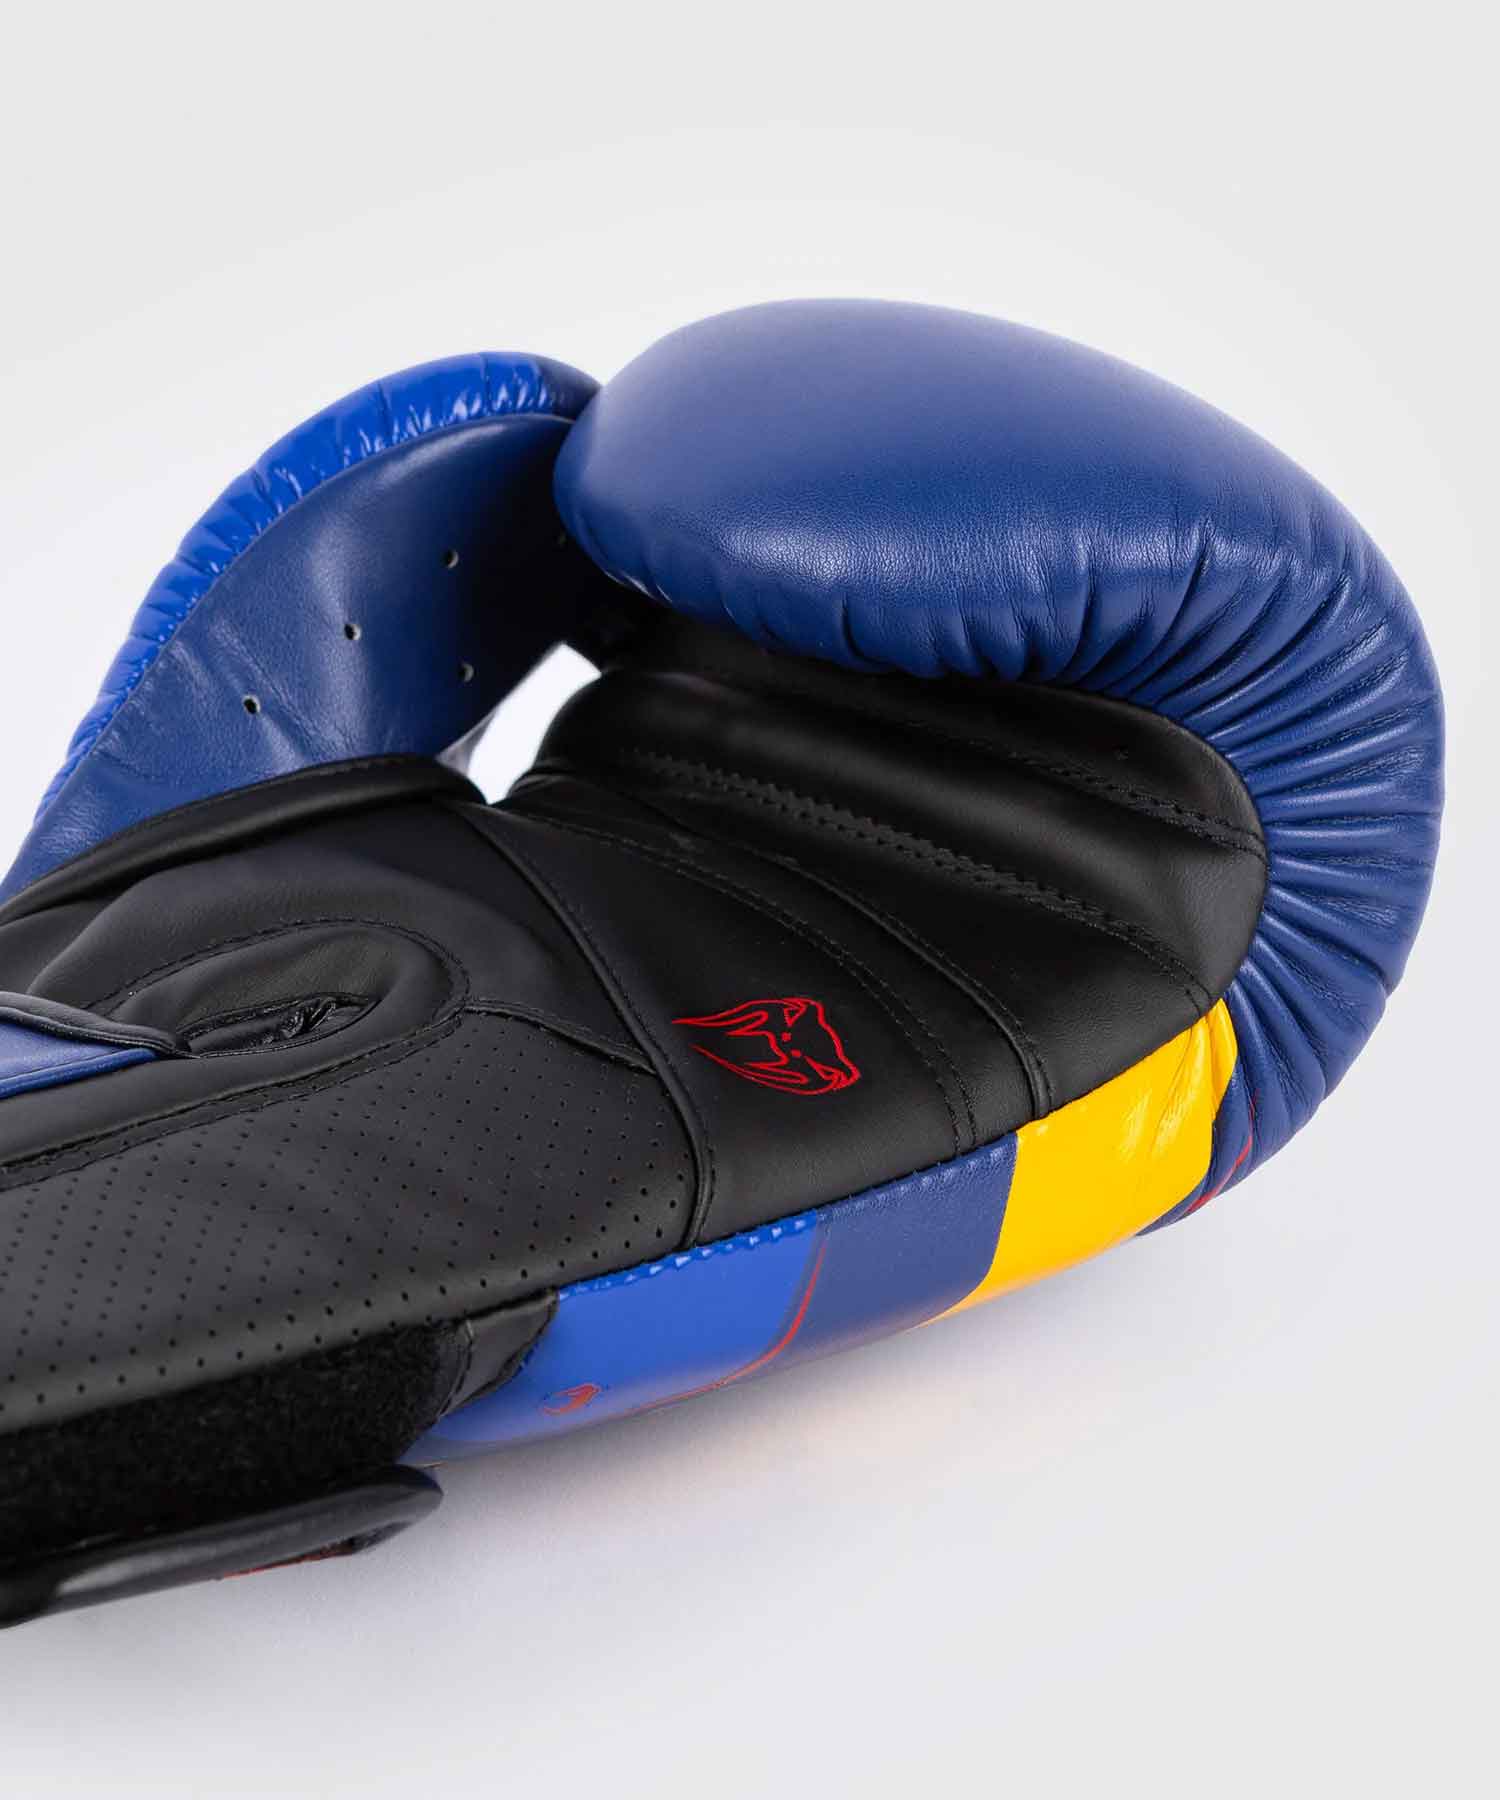 VENUM／ヴェナム　ボクシンググローブ　　Elite Evo Boxing Gloves／エリート エヴォ ボクシンググローブ（ブルー／イエロー／レッド）